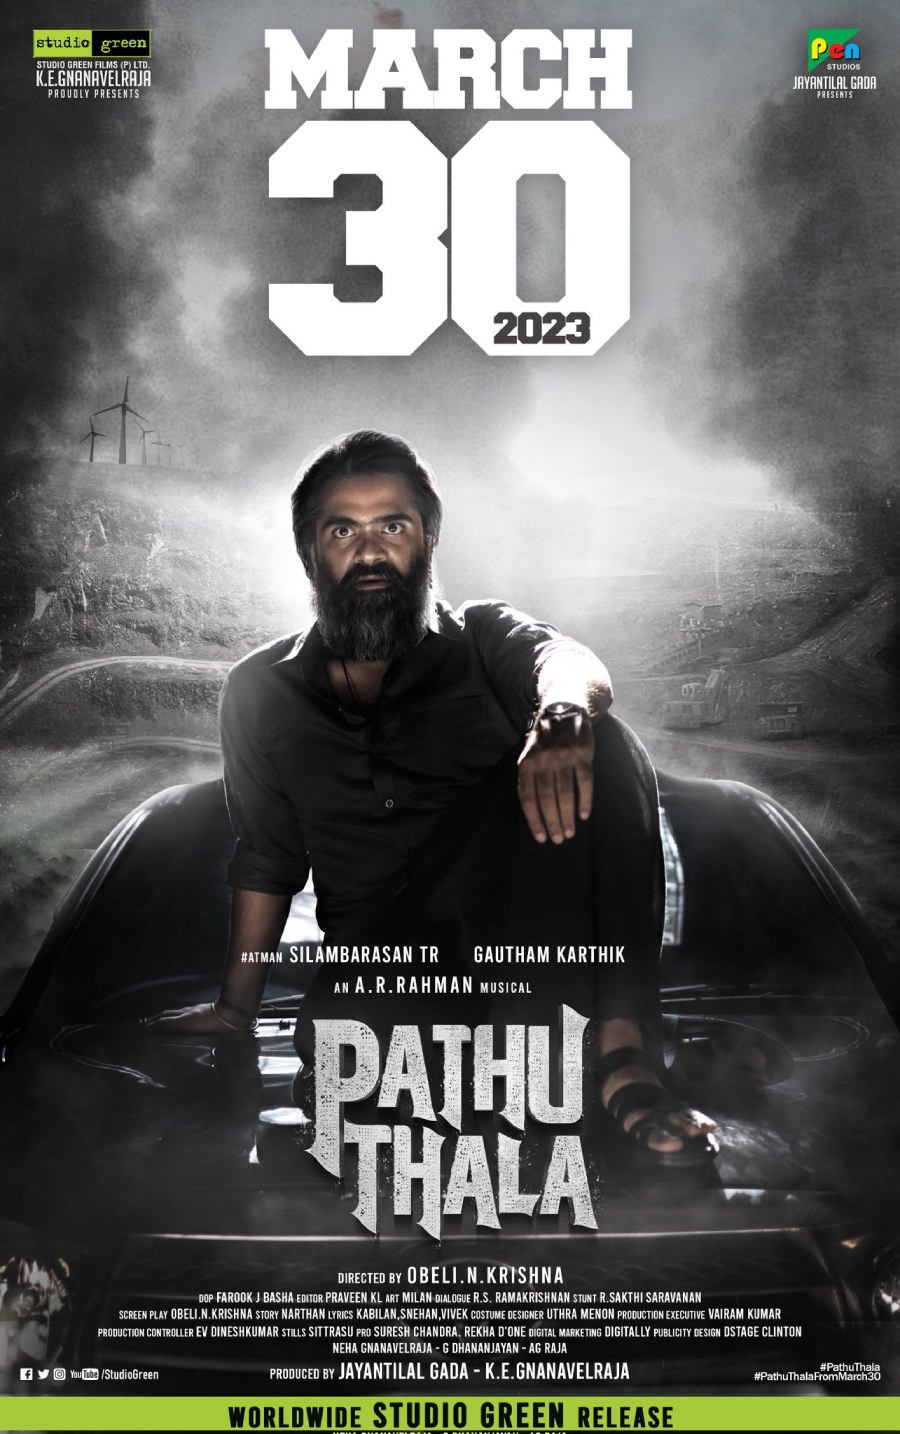 Pathu Thala release date announced